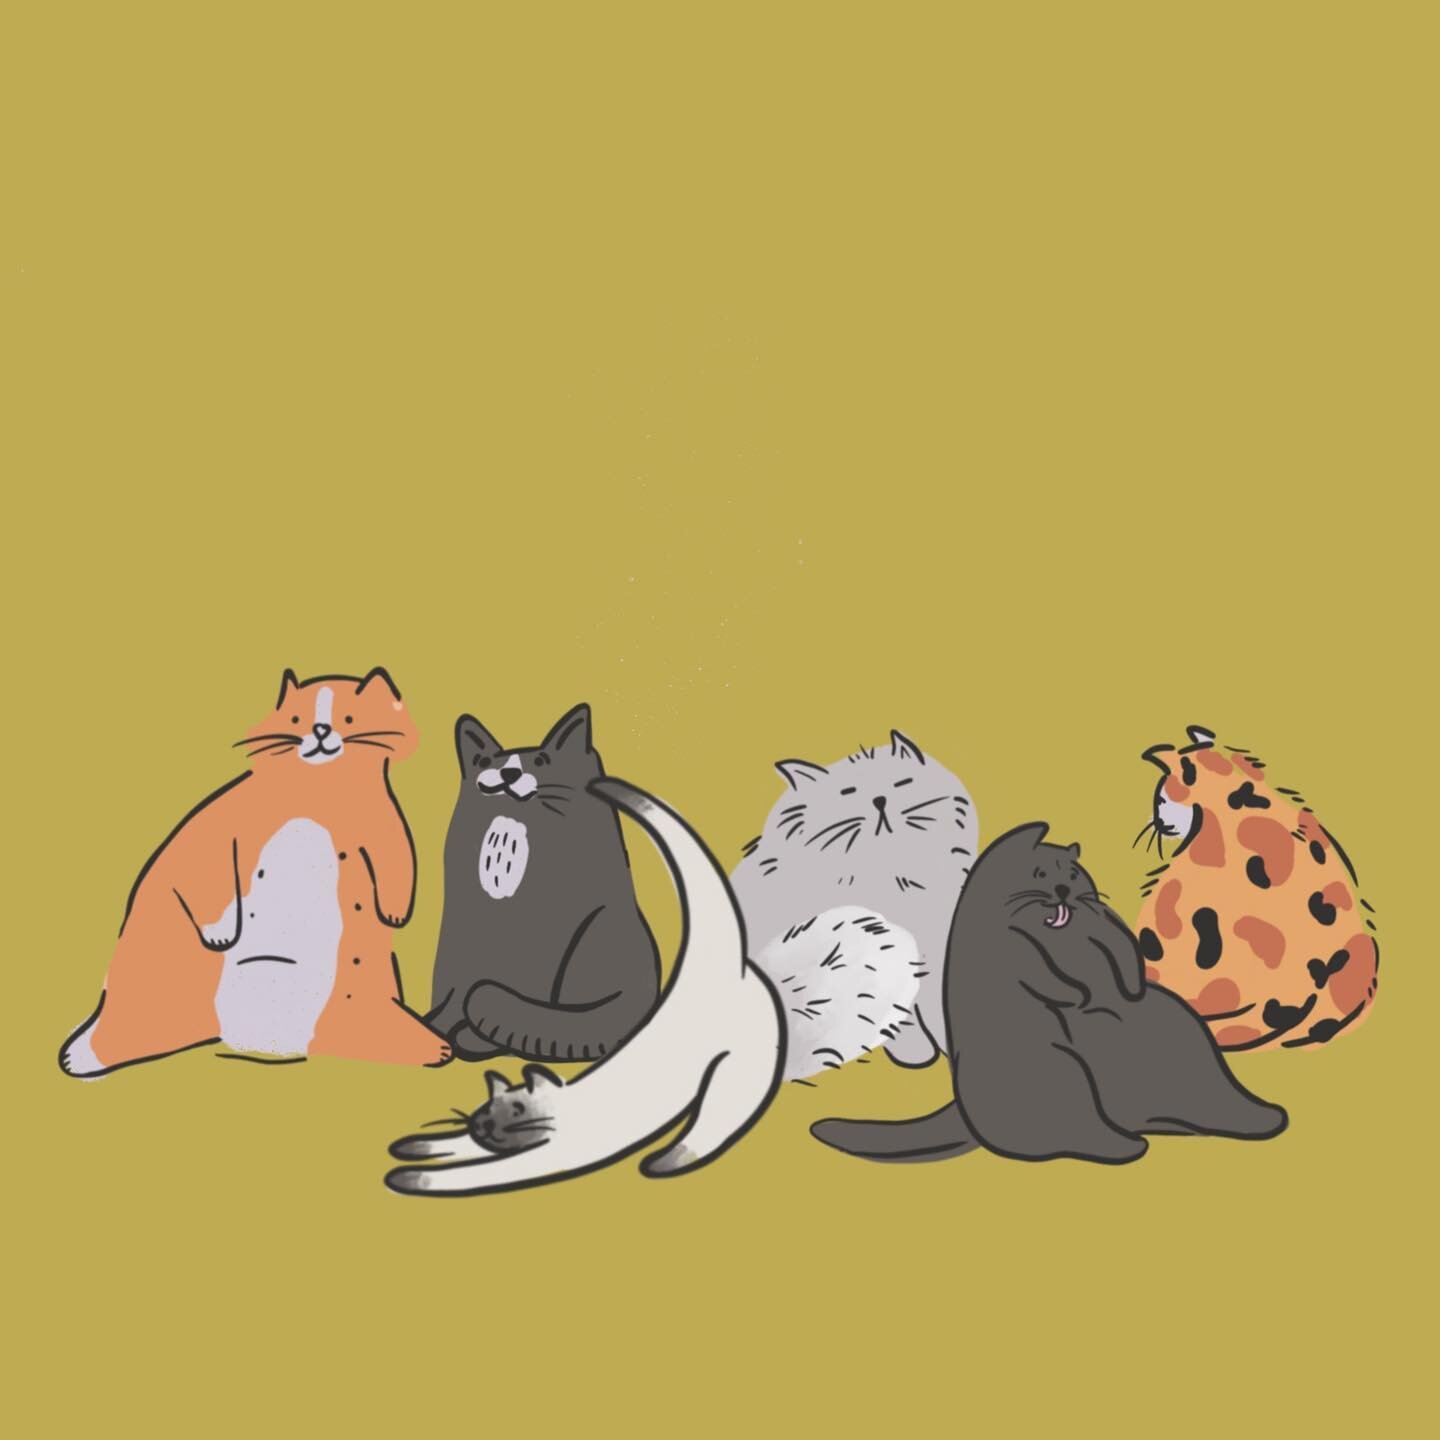 A few old kitties I found😺
#illustration #art #sketch #drawing #cat #catart